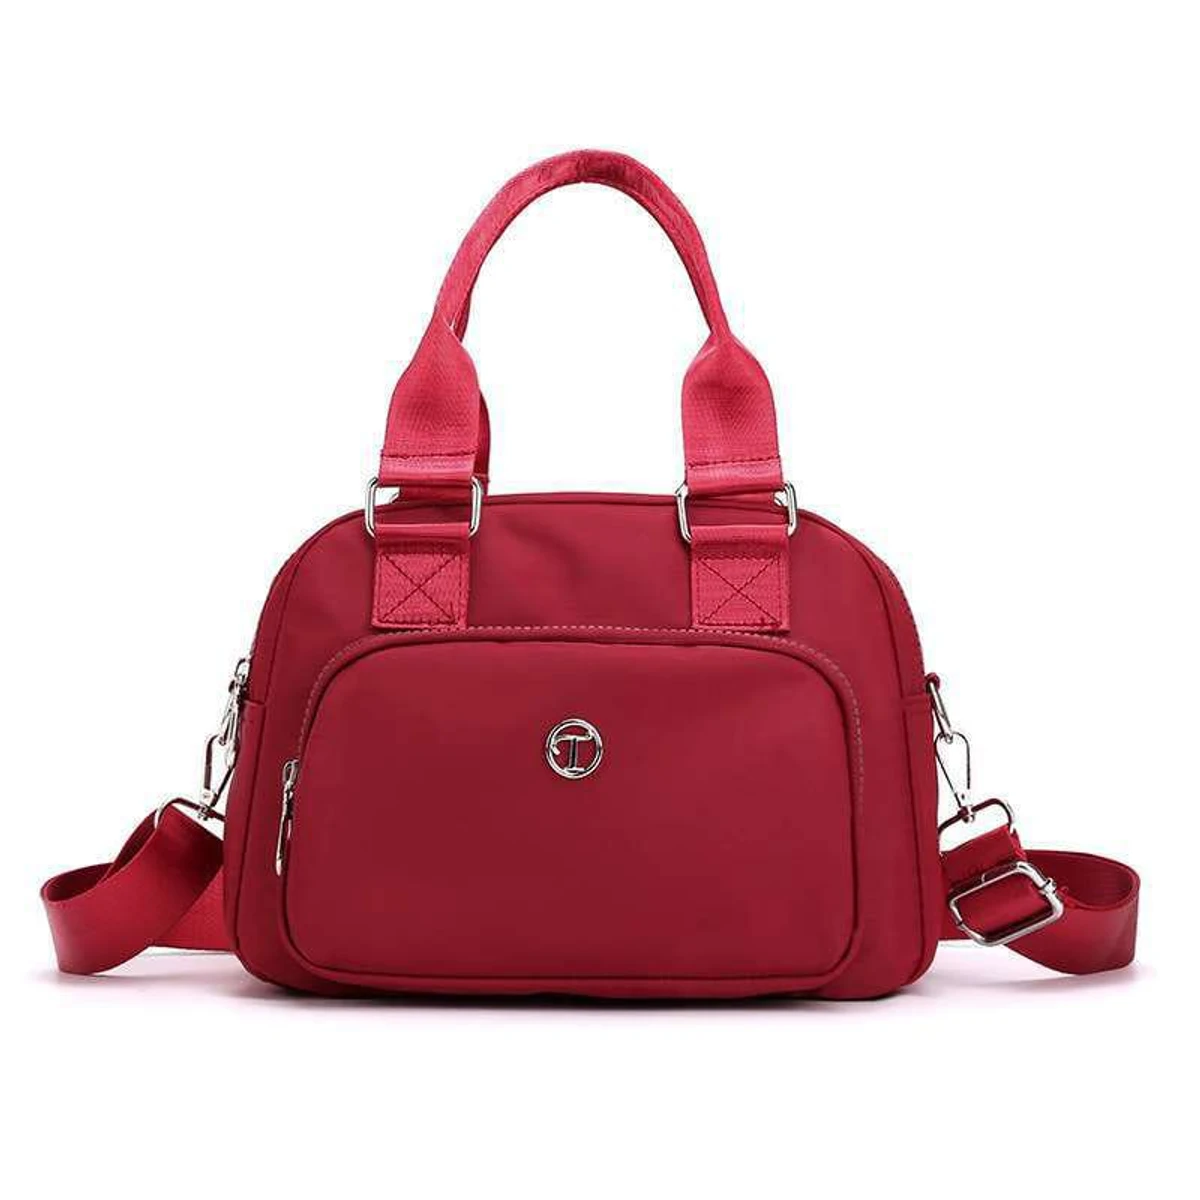 Large Capacity Fashionbag ( maroon color )